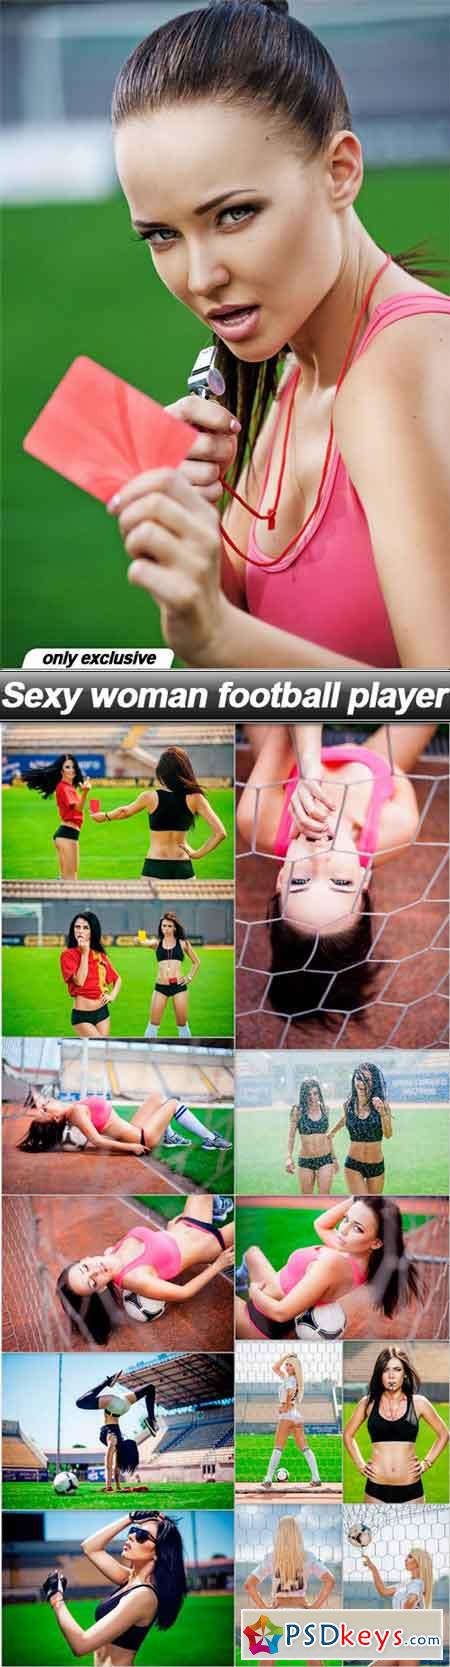 Sexy woman football player - 14 UHQ JPEG